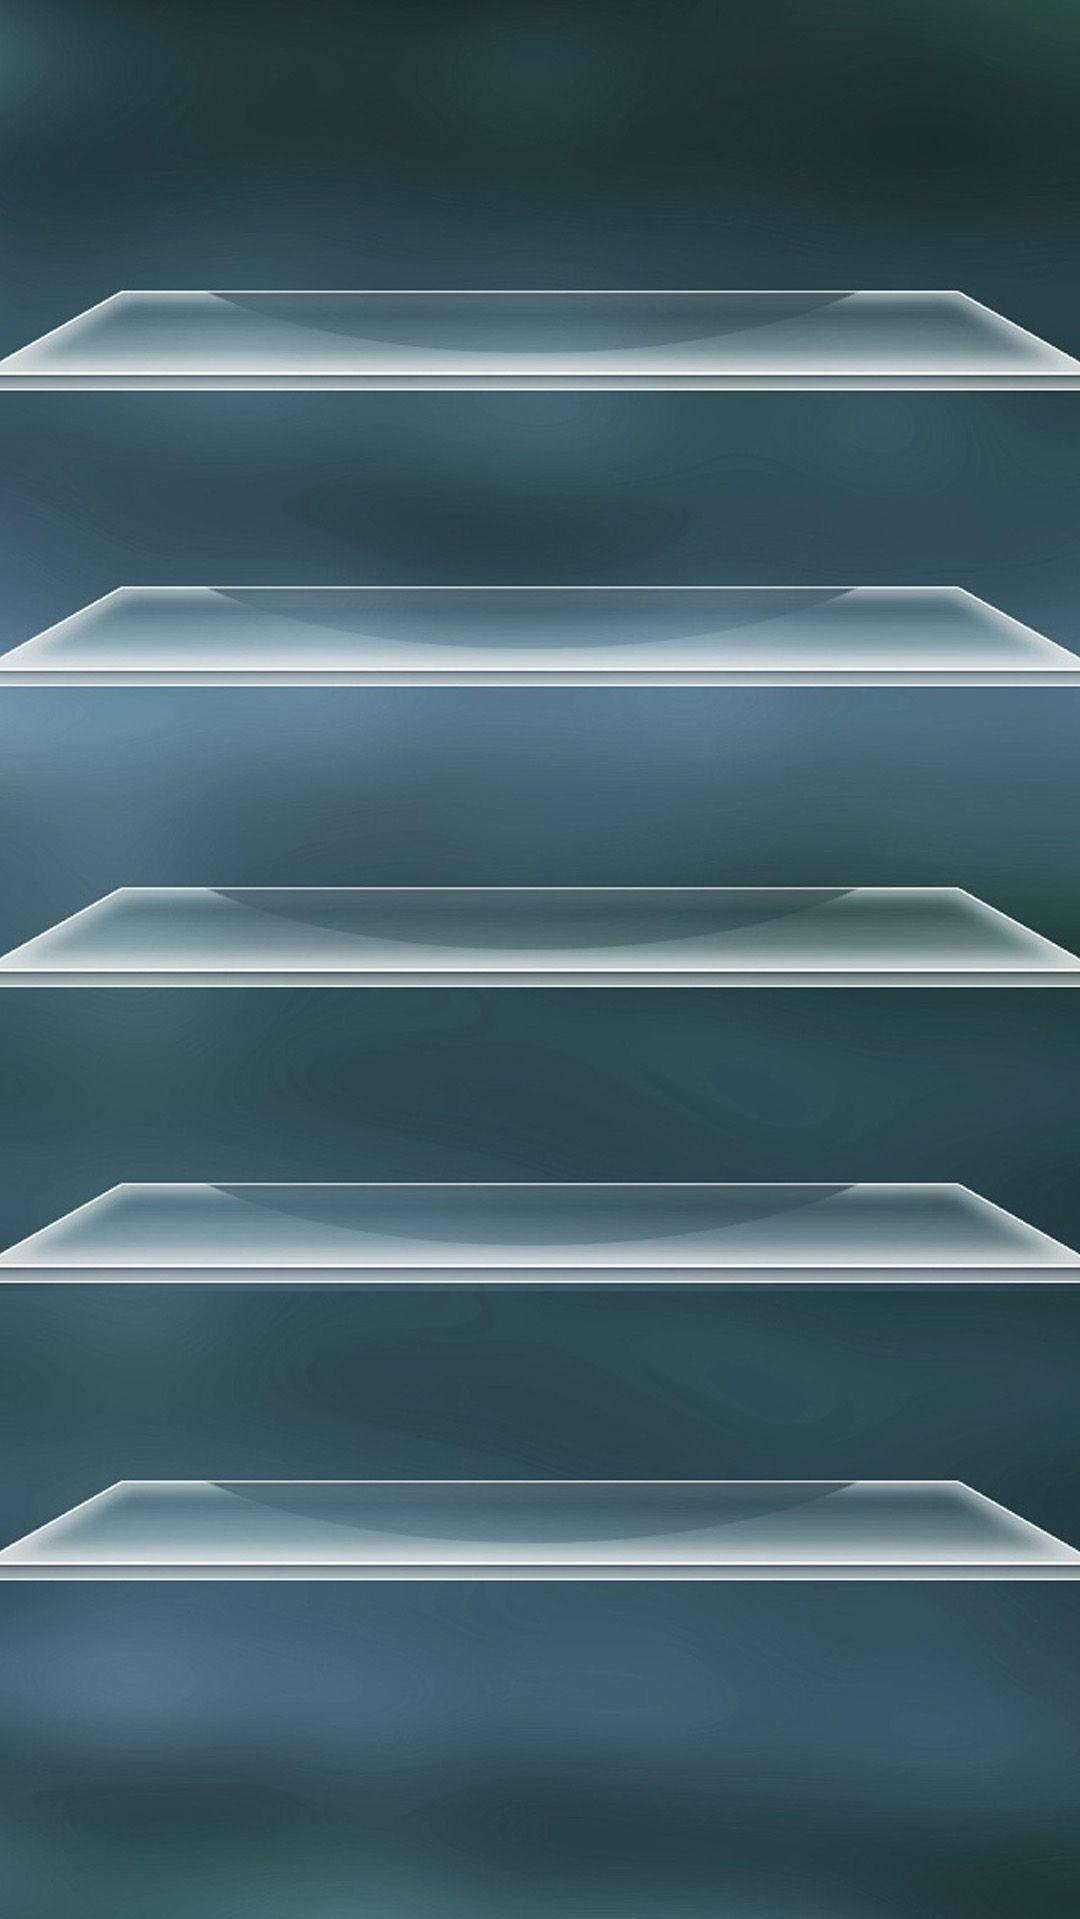 Glass Shelves iPhone 6s Plus Wallpaper